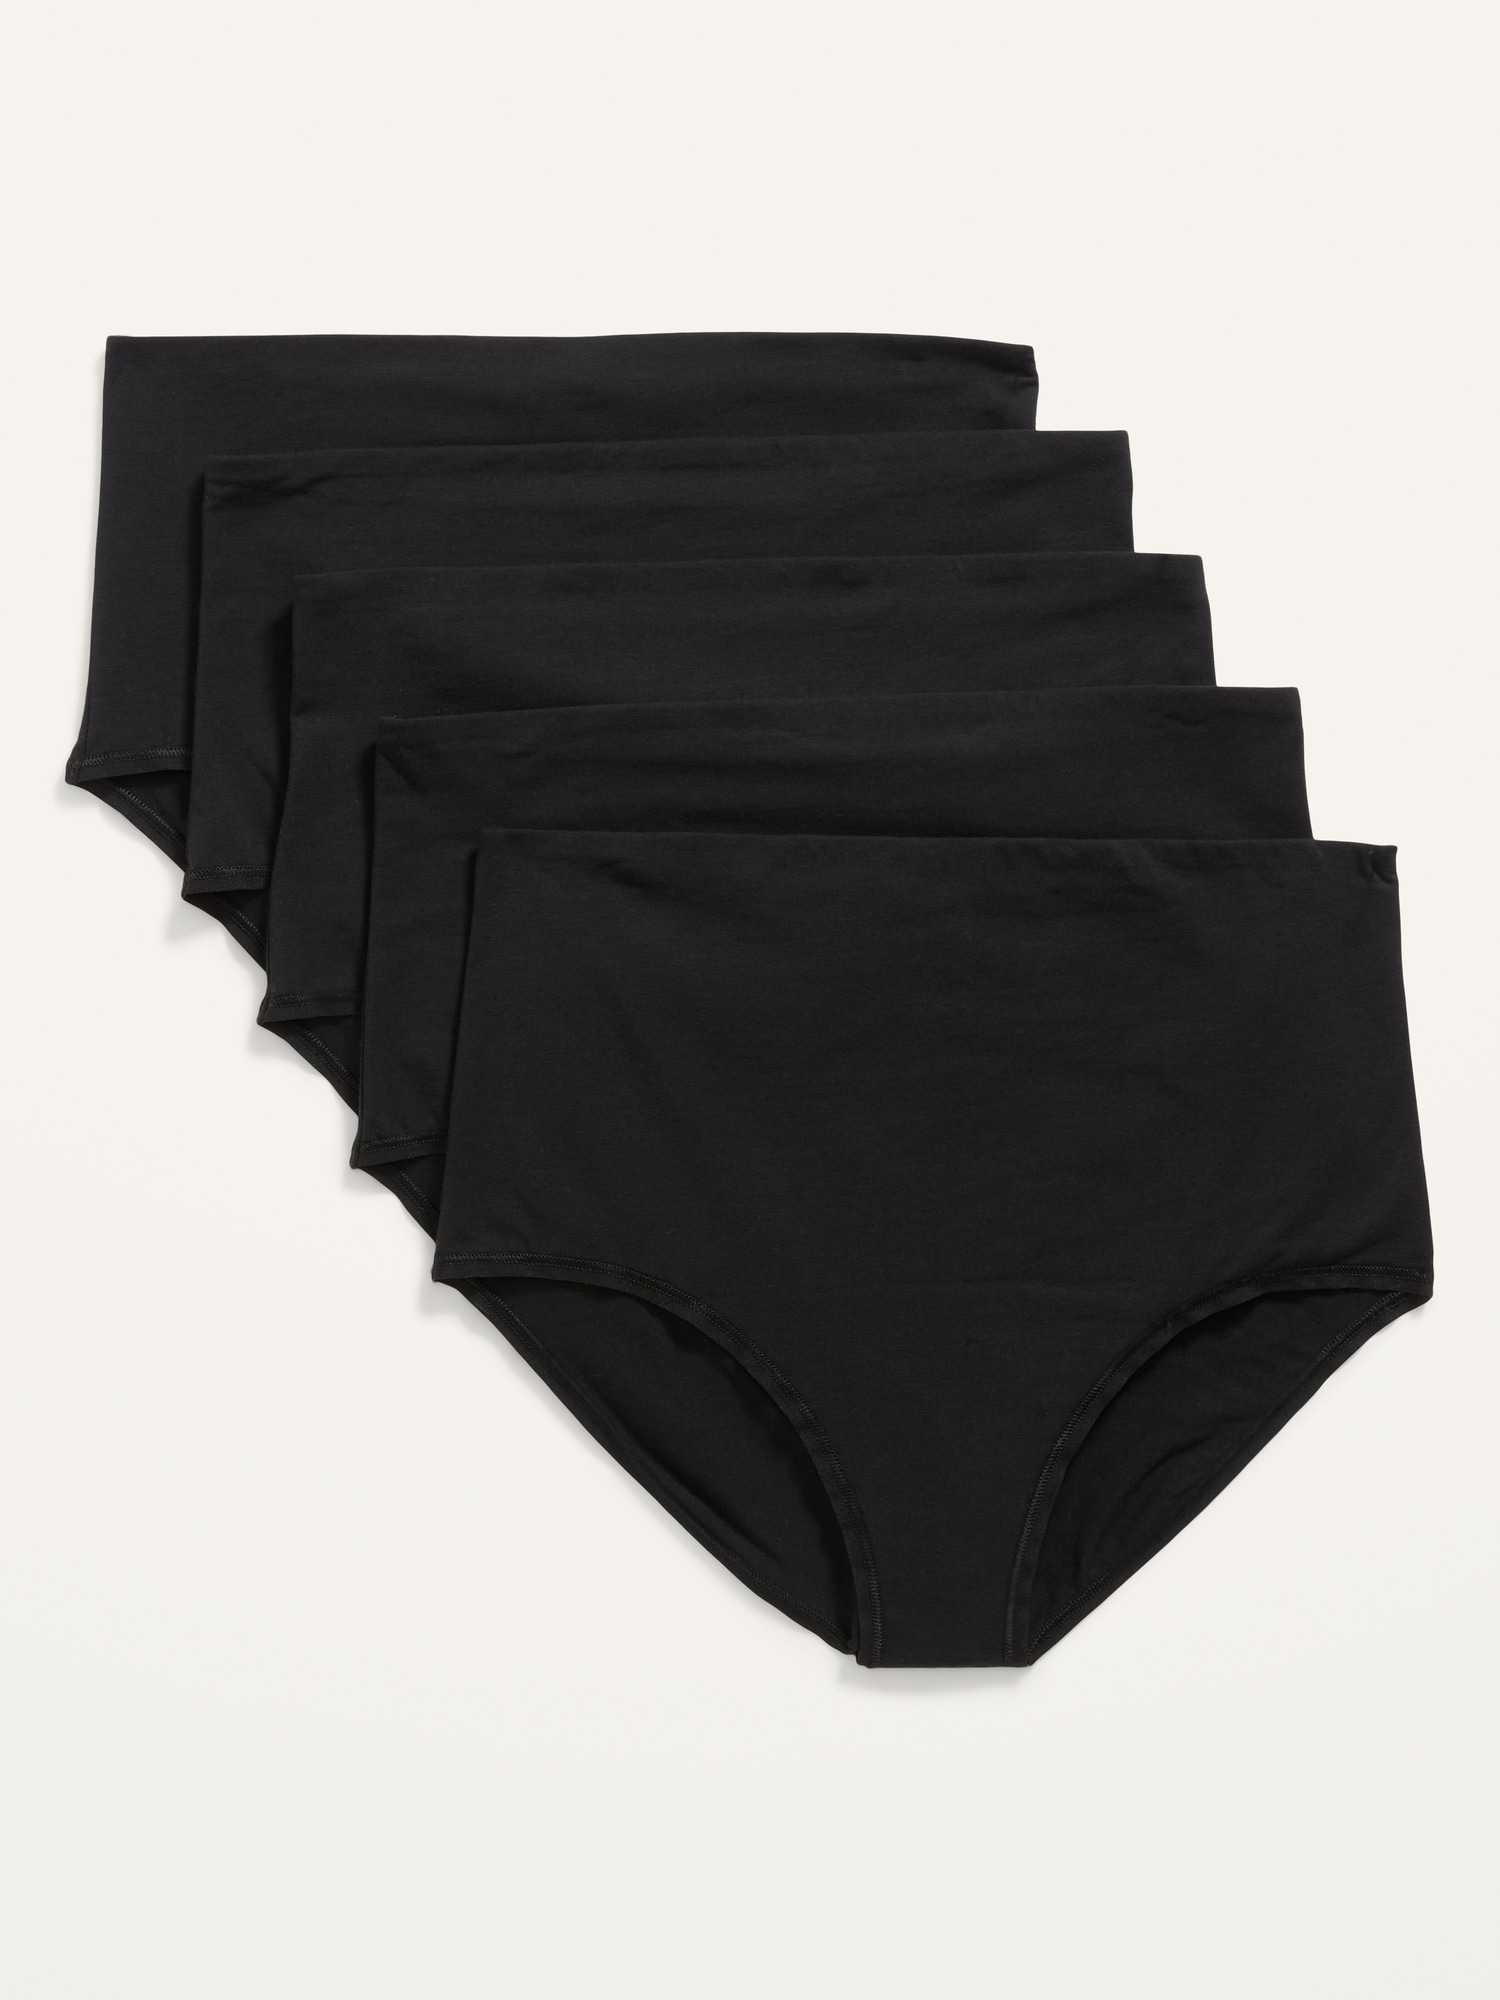 YWHUANSEN 4pcs/lot Cotton Disposable Panties Maternity Underwear